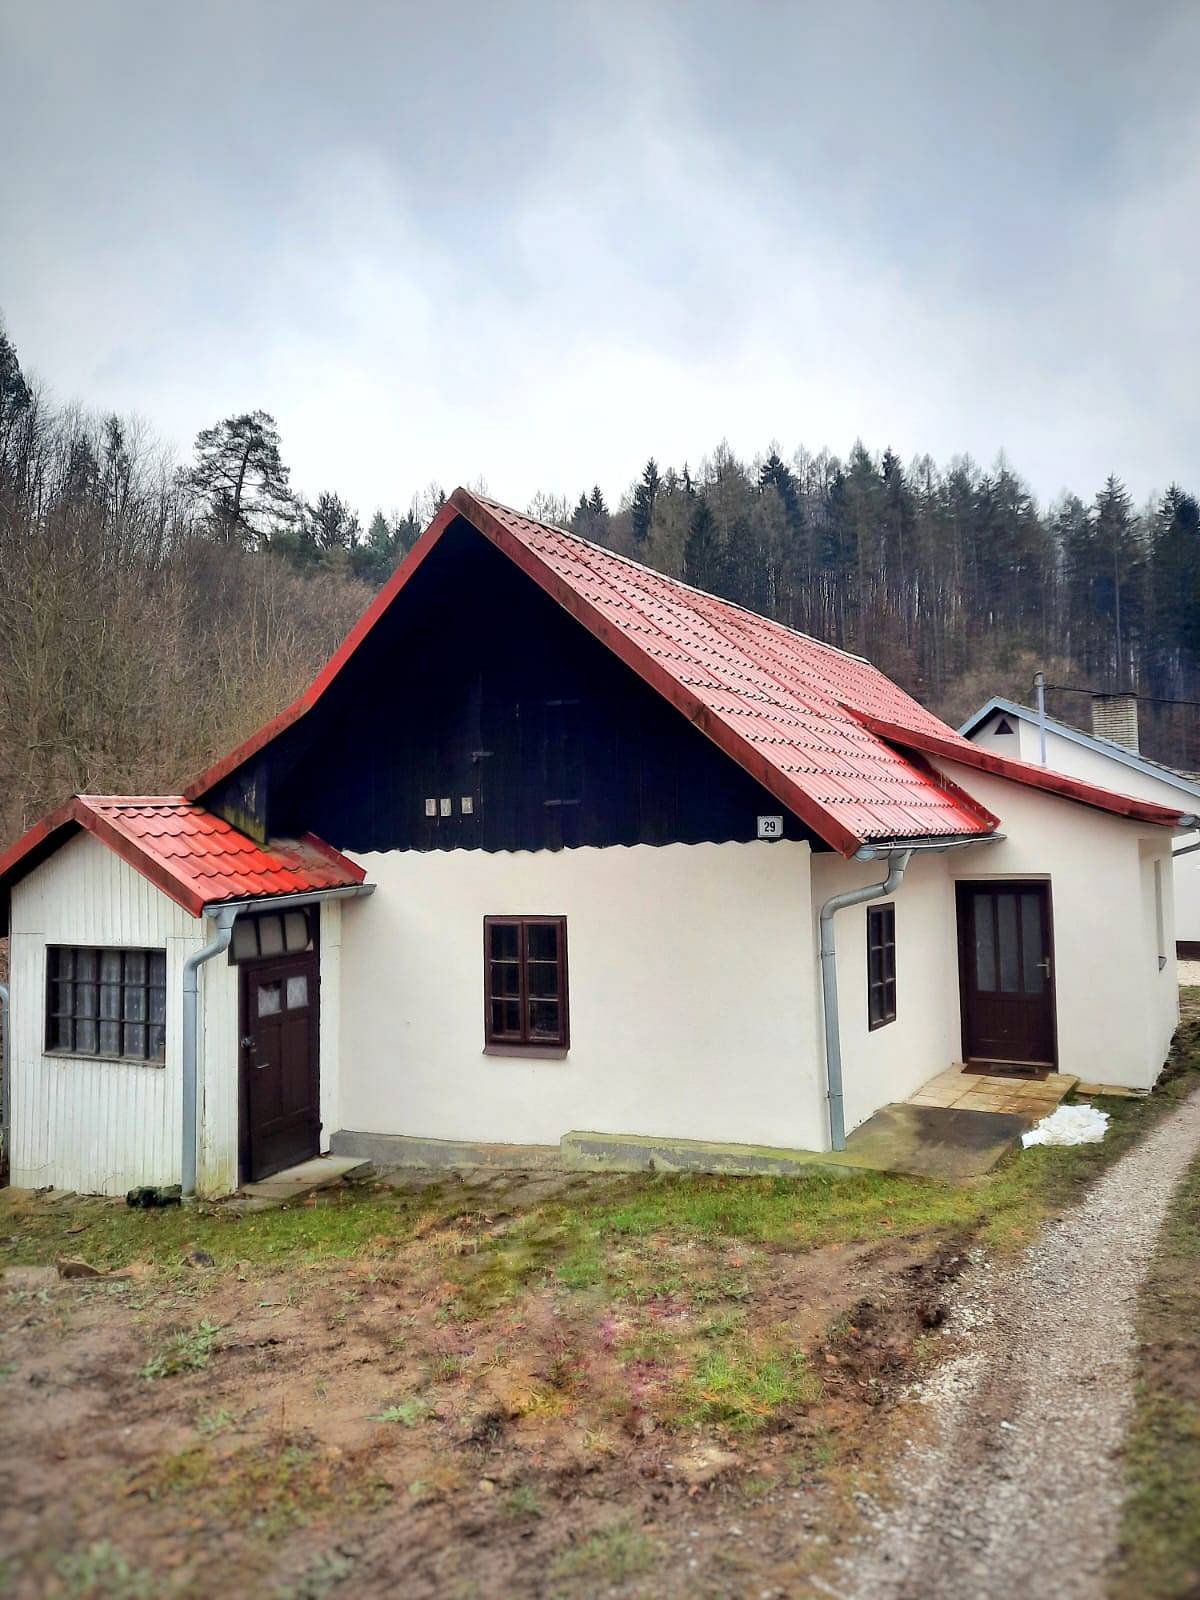 Vlárka cottage from the front